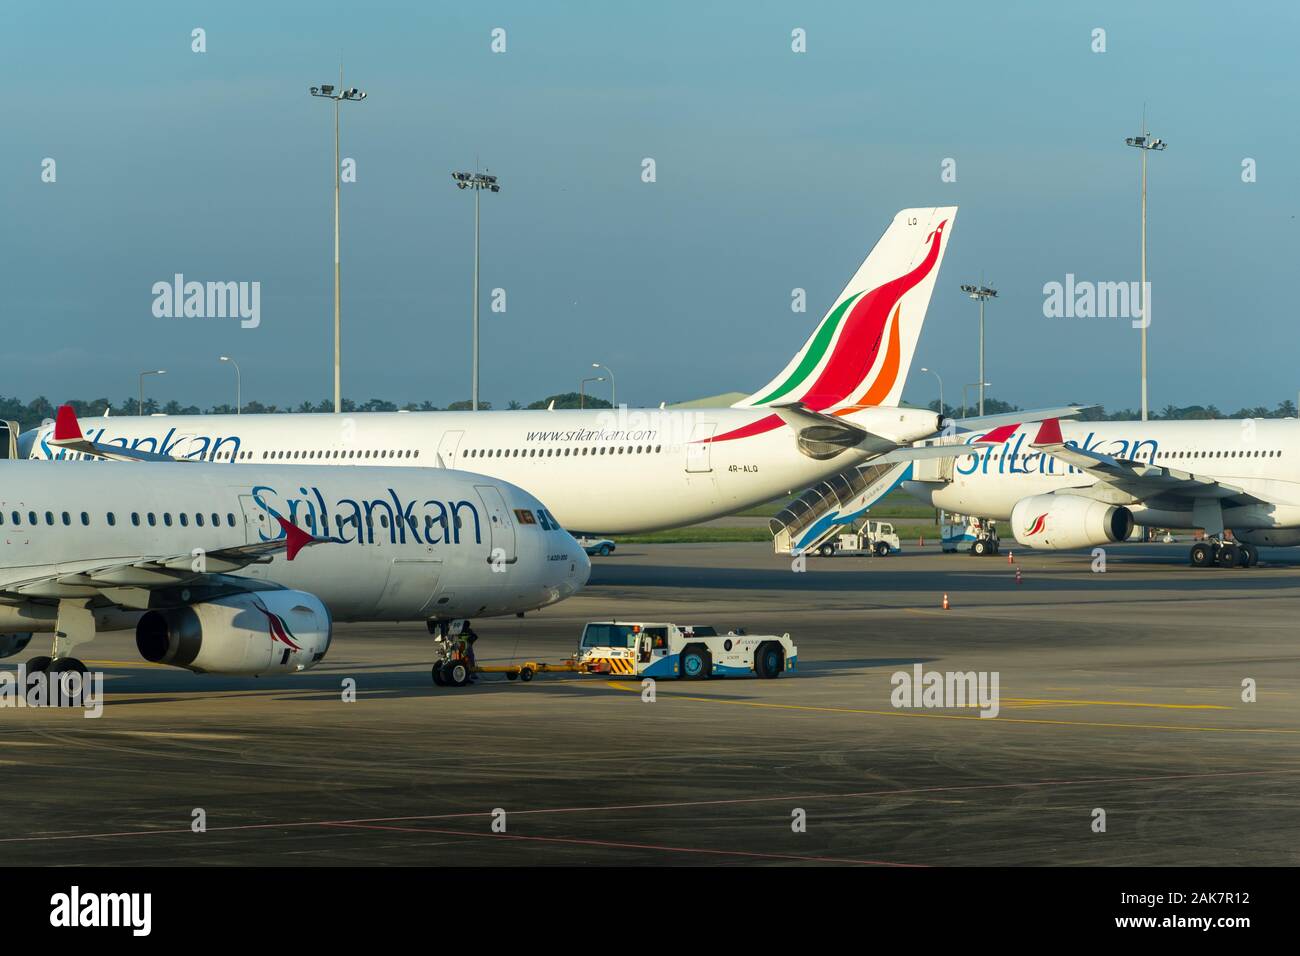 Srilankan airlines